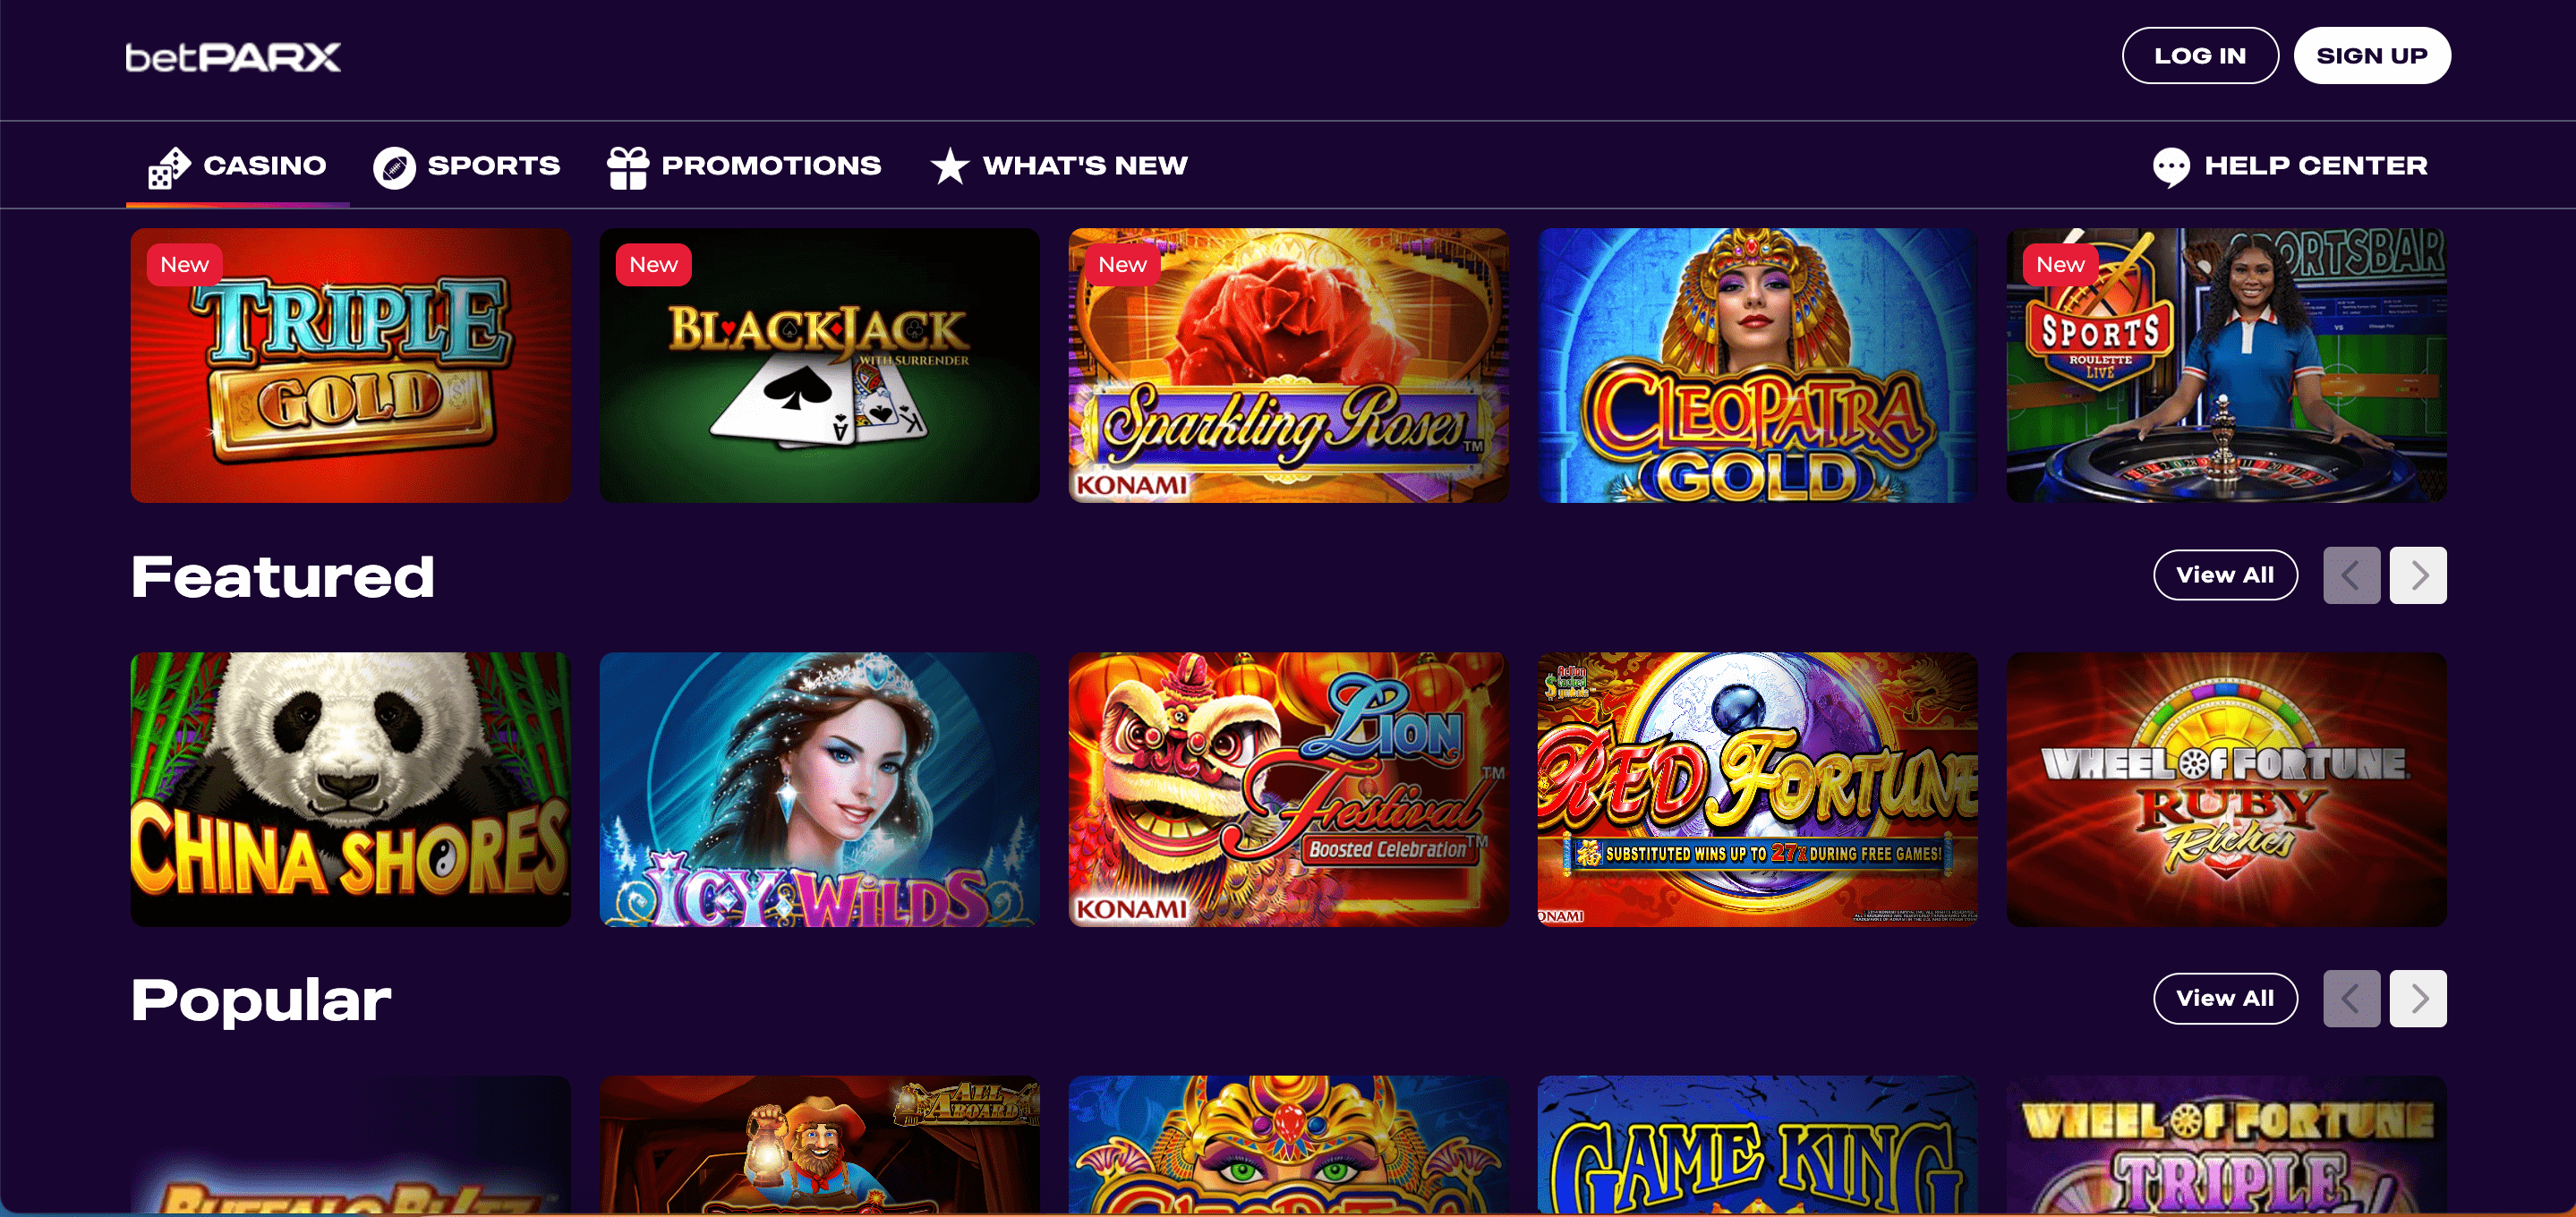 betPARX Casino NJ Home Page